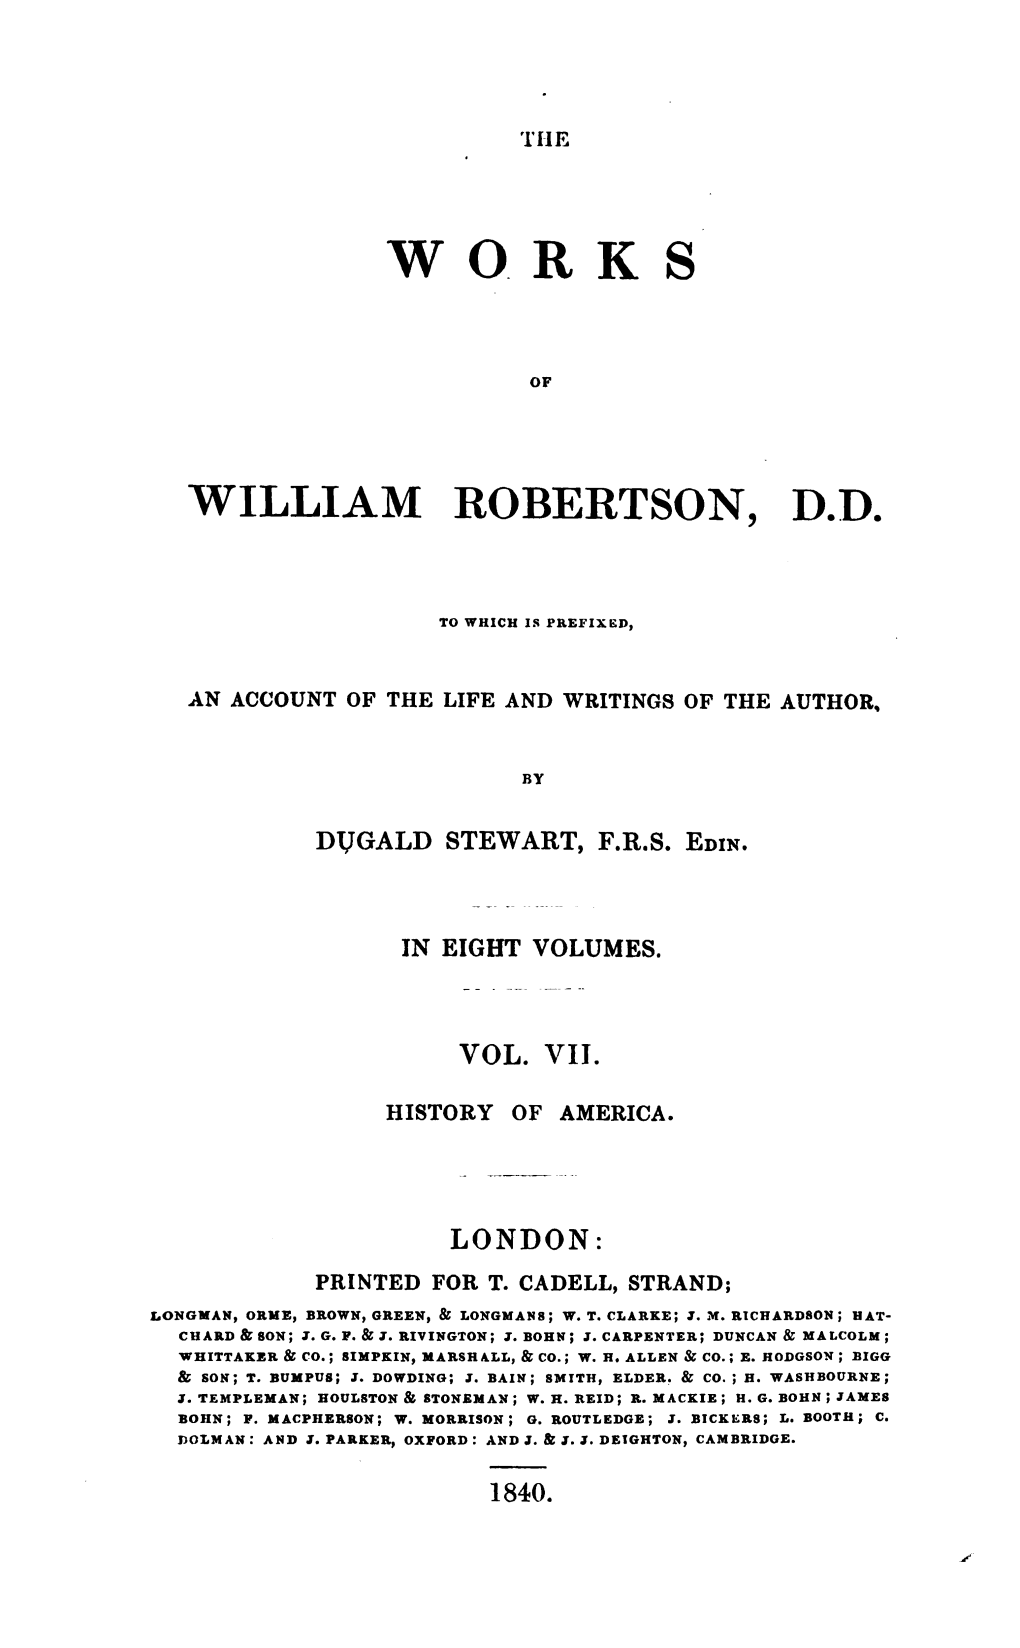 William Robertson, D.D